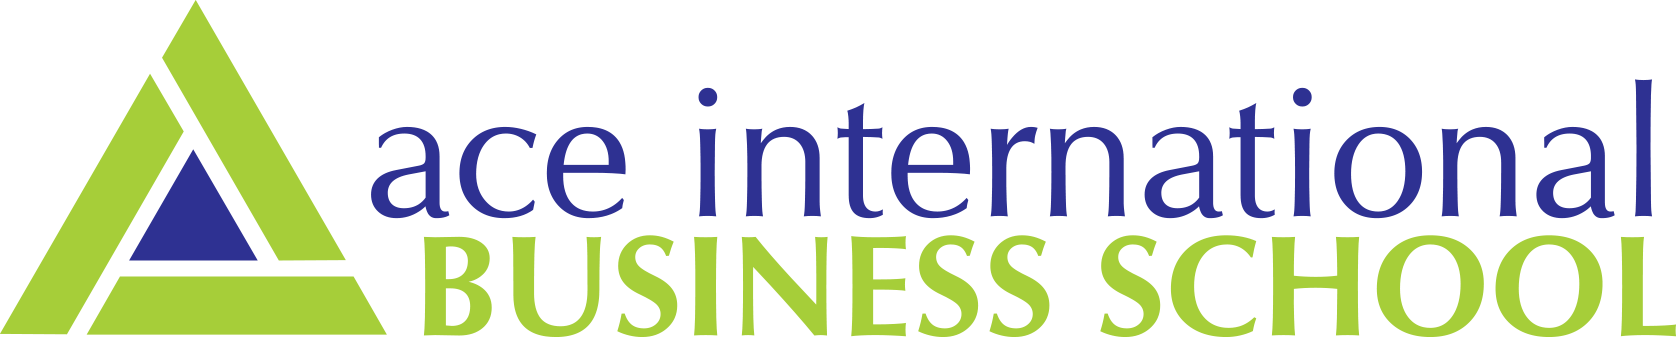 Ace International Business School Logo - Ace International Business School Kathmandu (1676x337), Png Download